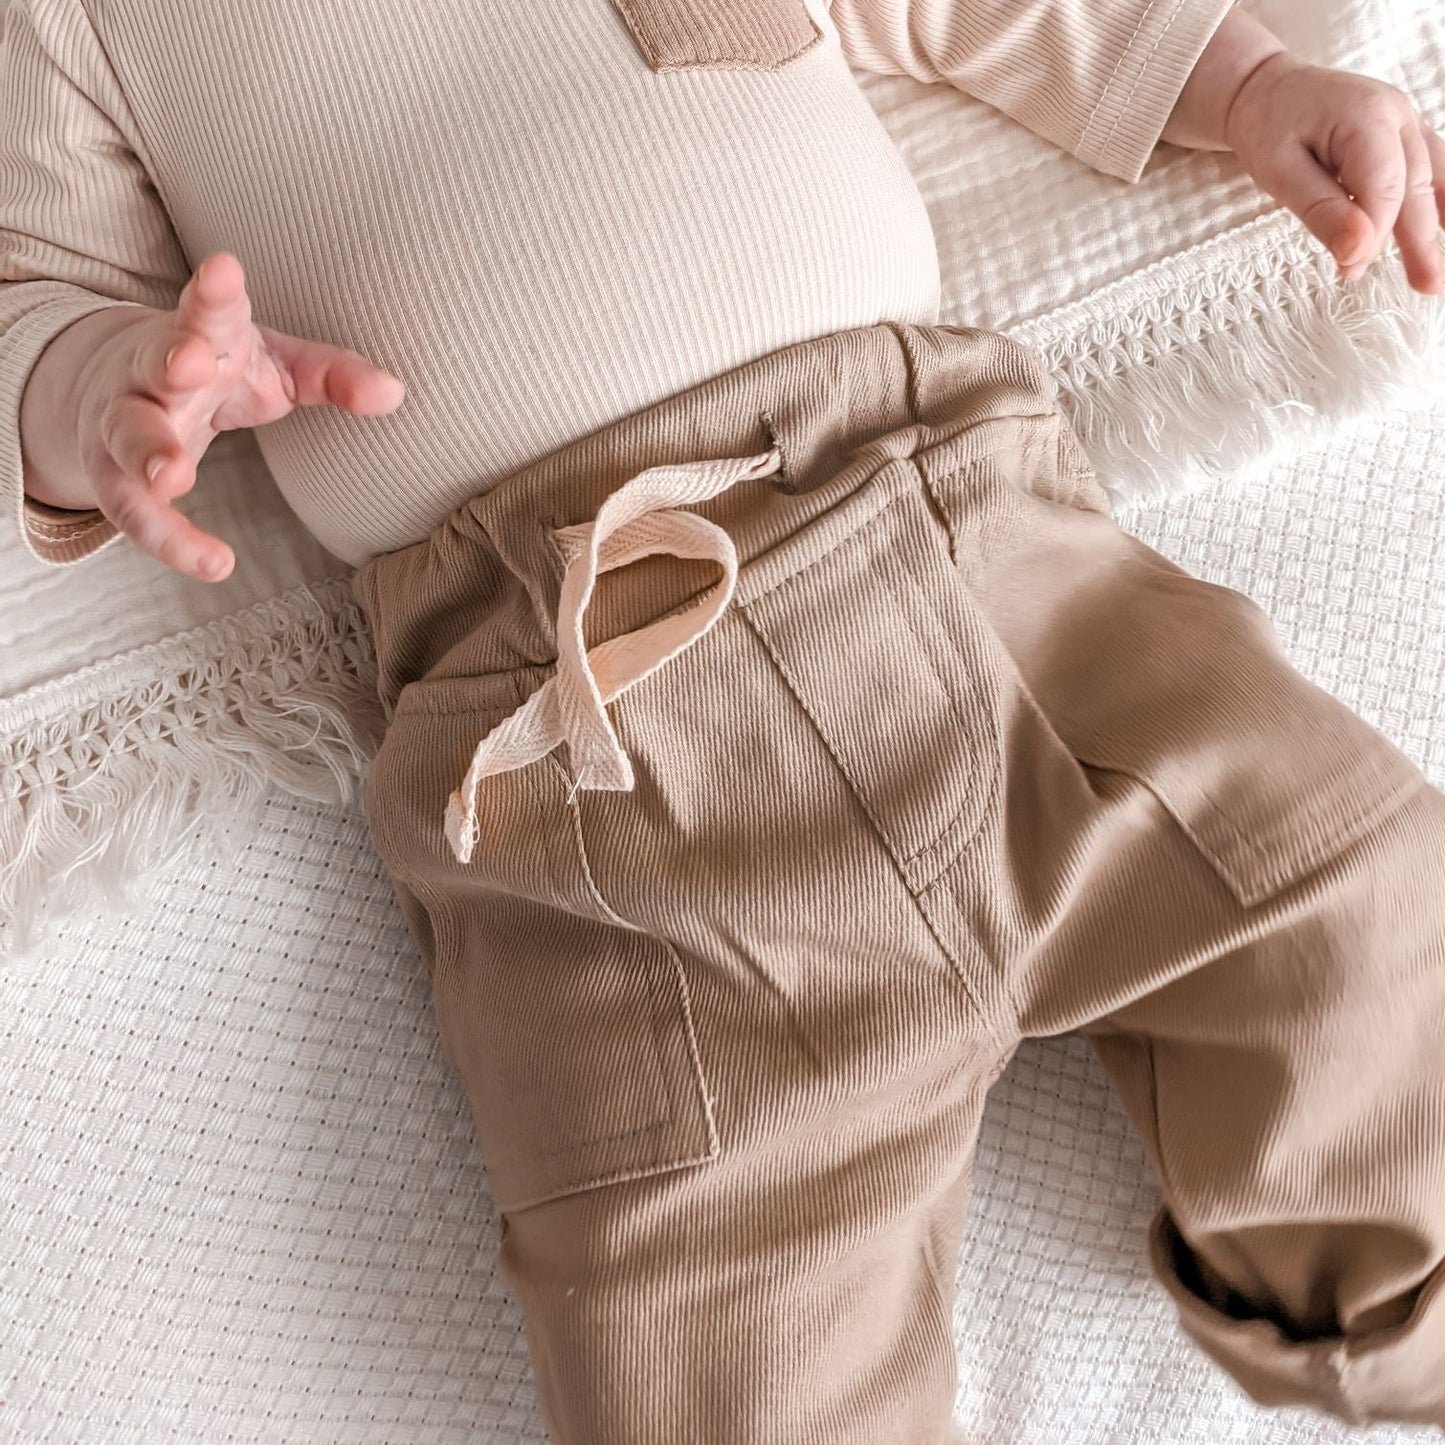 Baby chino pants, drawstring, tan. Boys trousers. with pockets